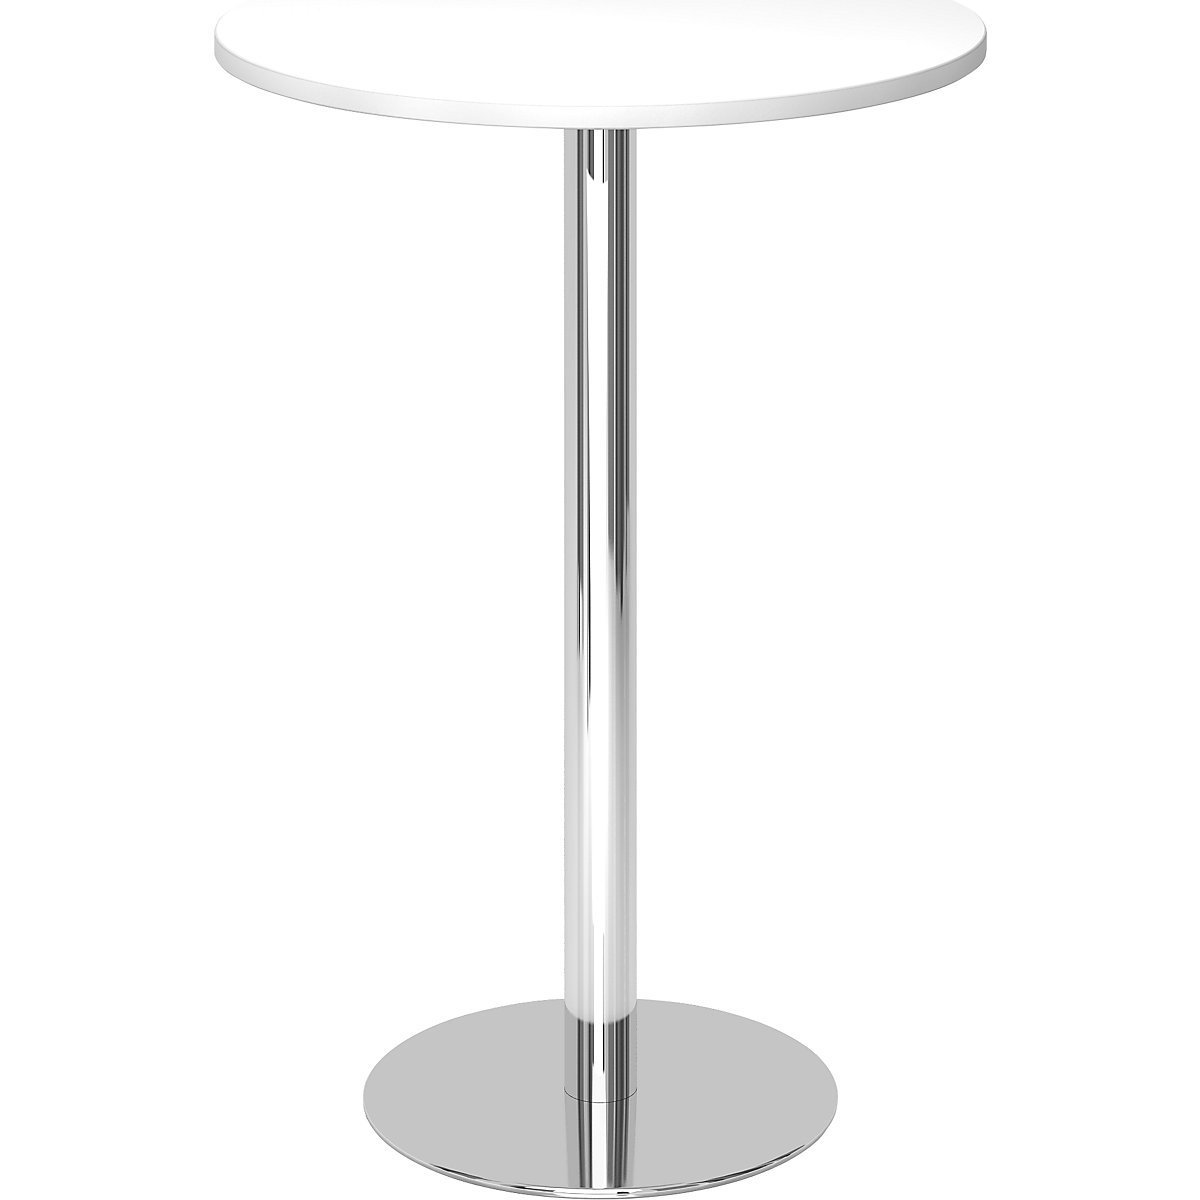 Pedestal table, Ø 800 mm